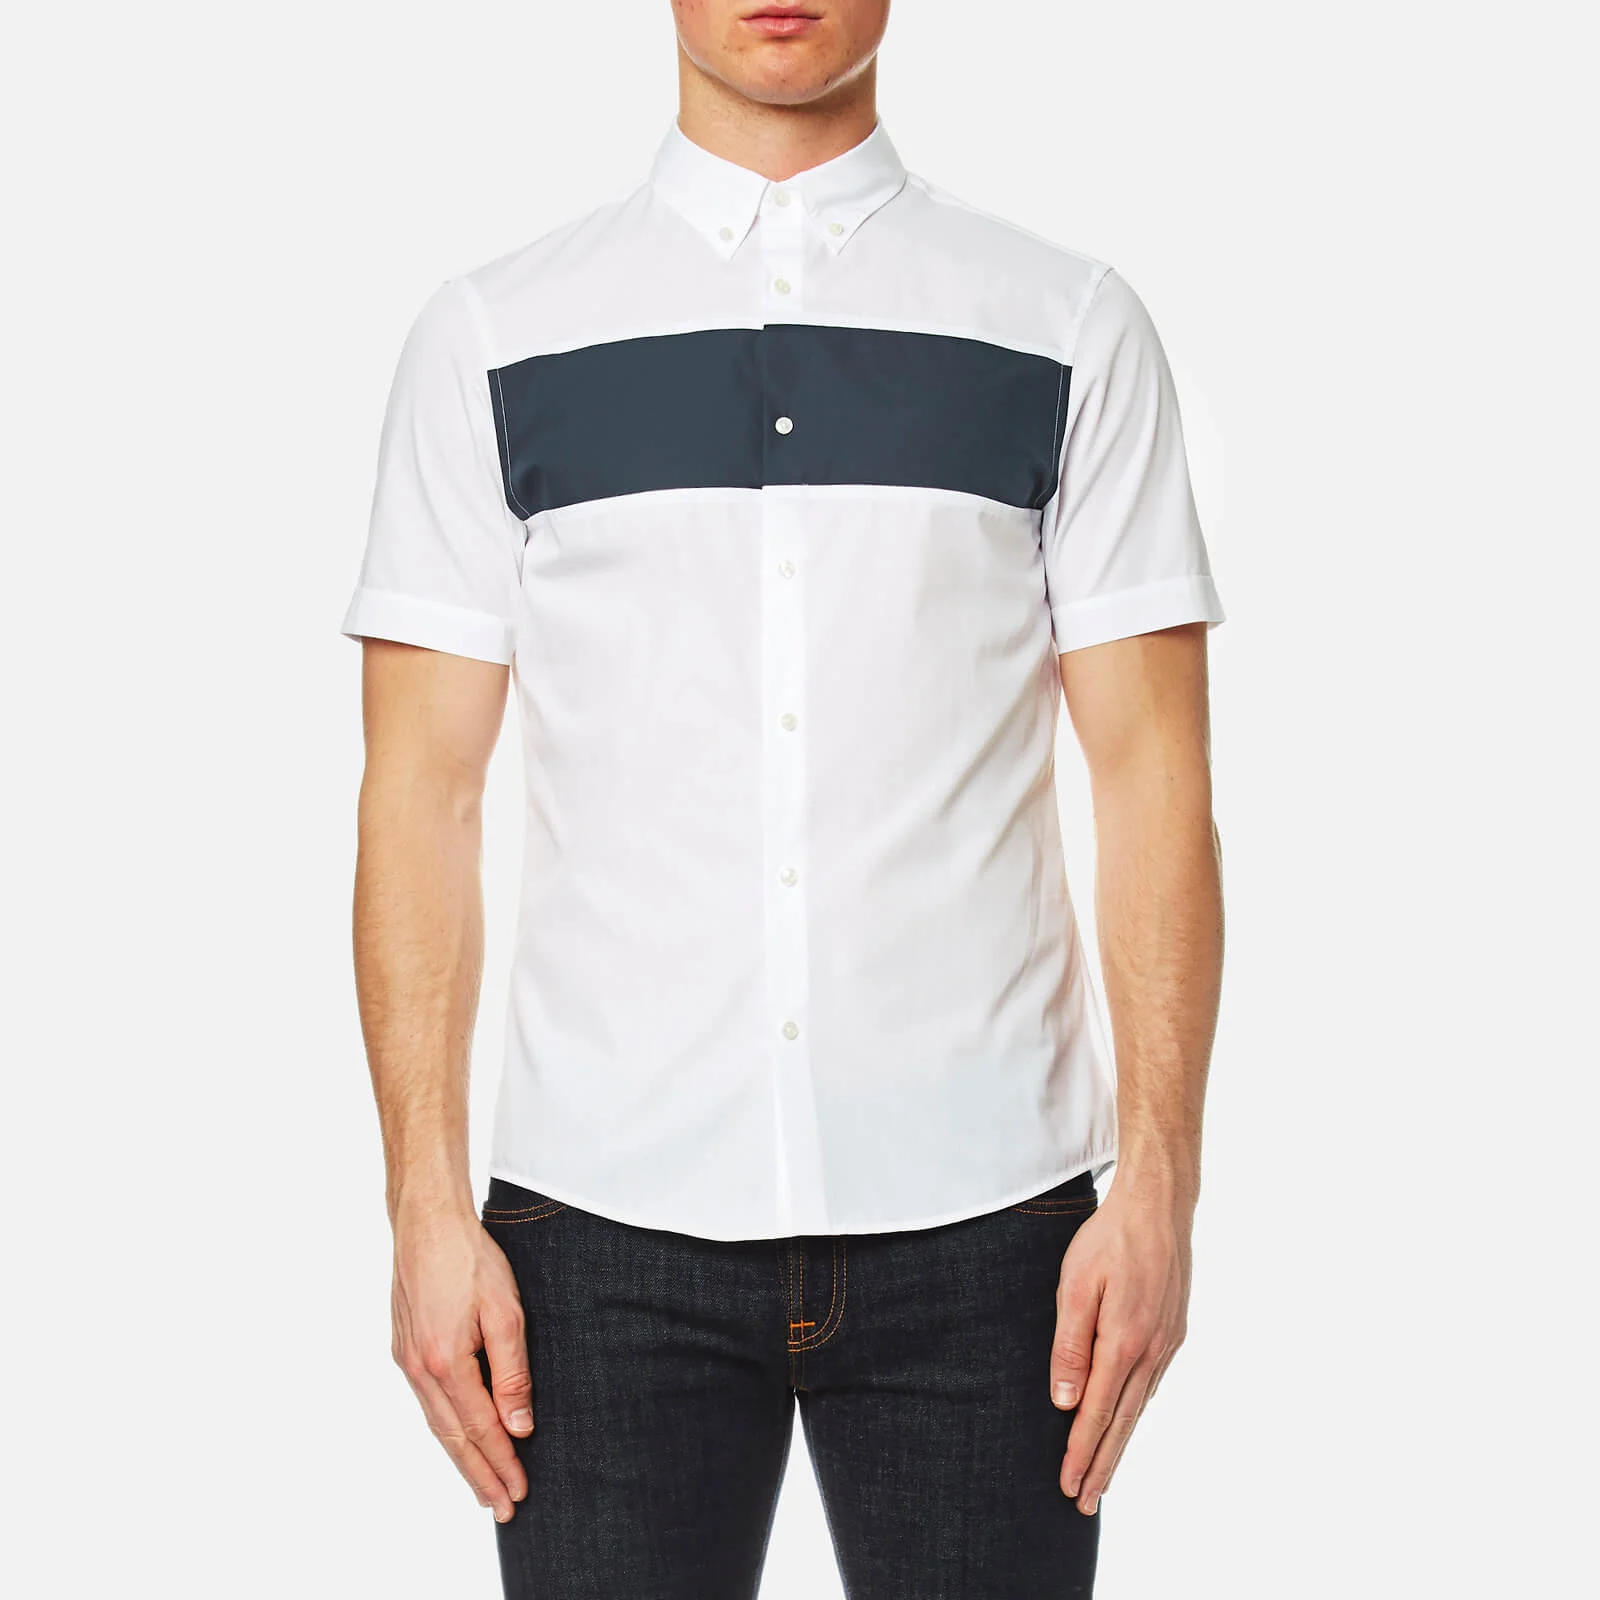 Michael Kors Men's Short Sleeve Colour Block Shirt - White Image 1